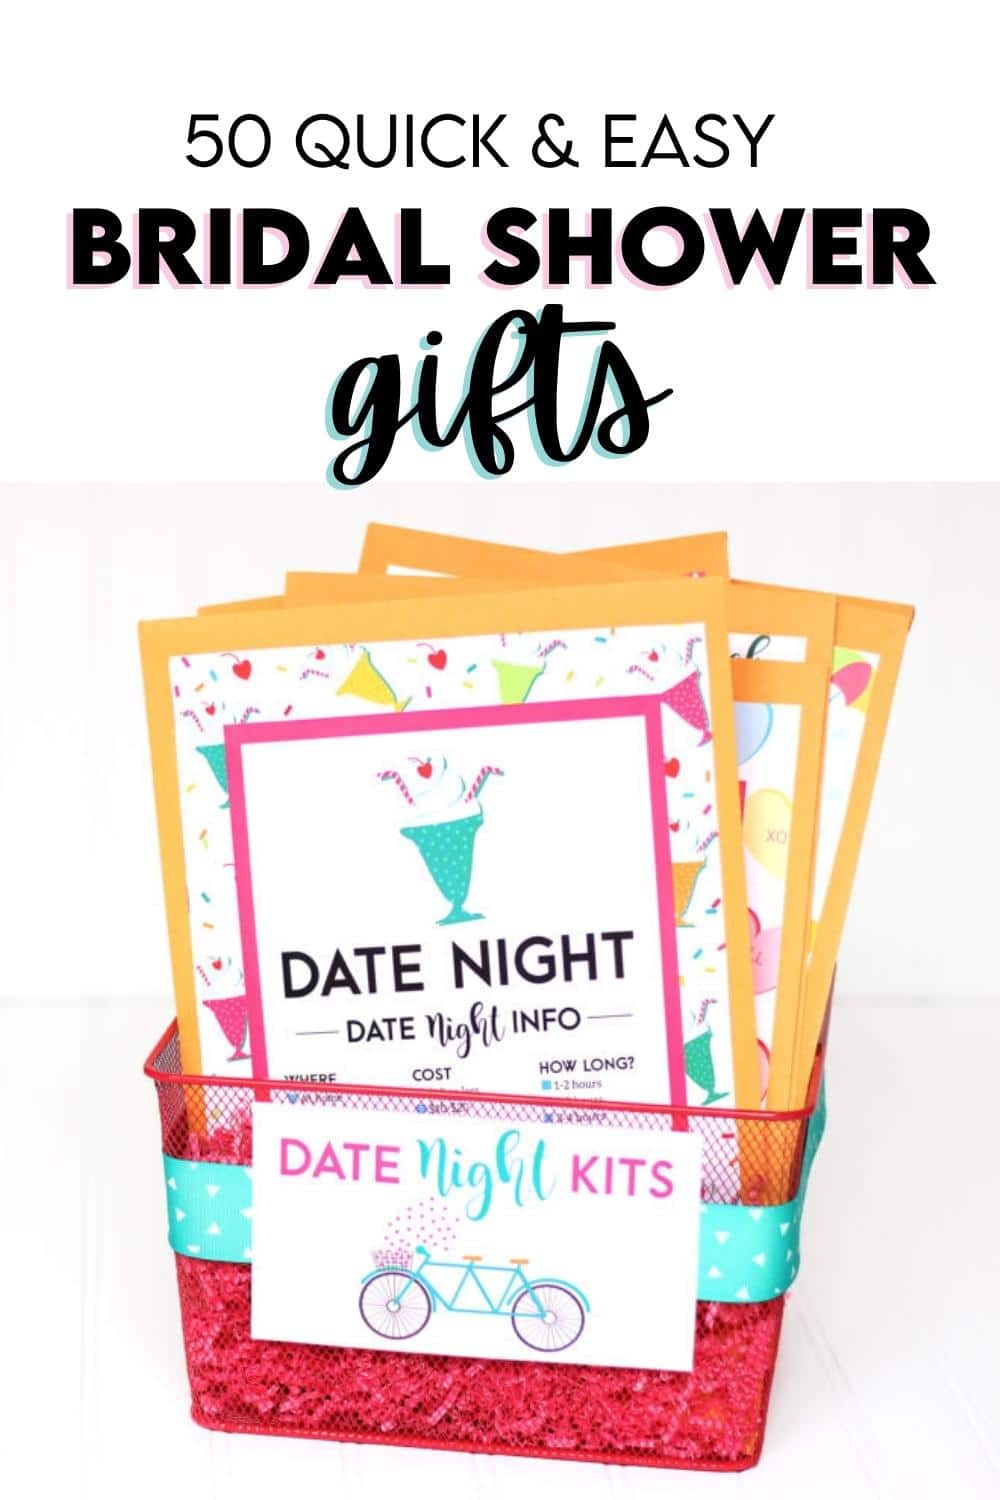 https://www.thedatingdivas.com/wp-content/uploads/2022/05/The-Best-Bridal-Shower-Gifts.jpg